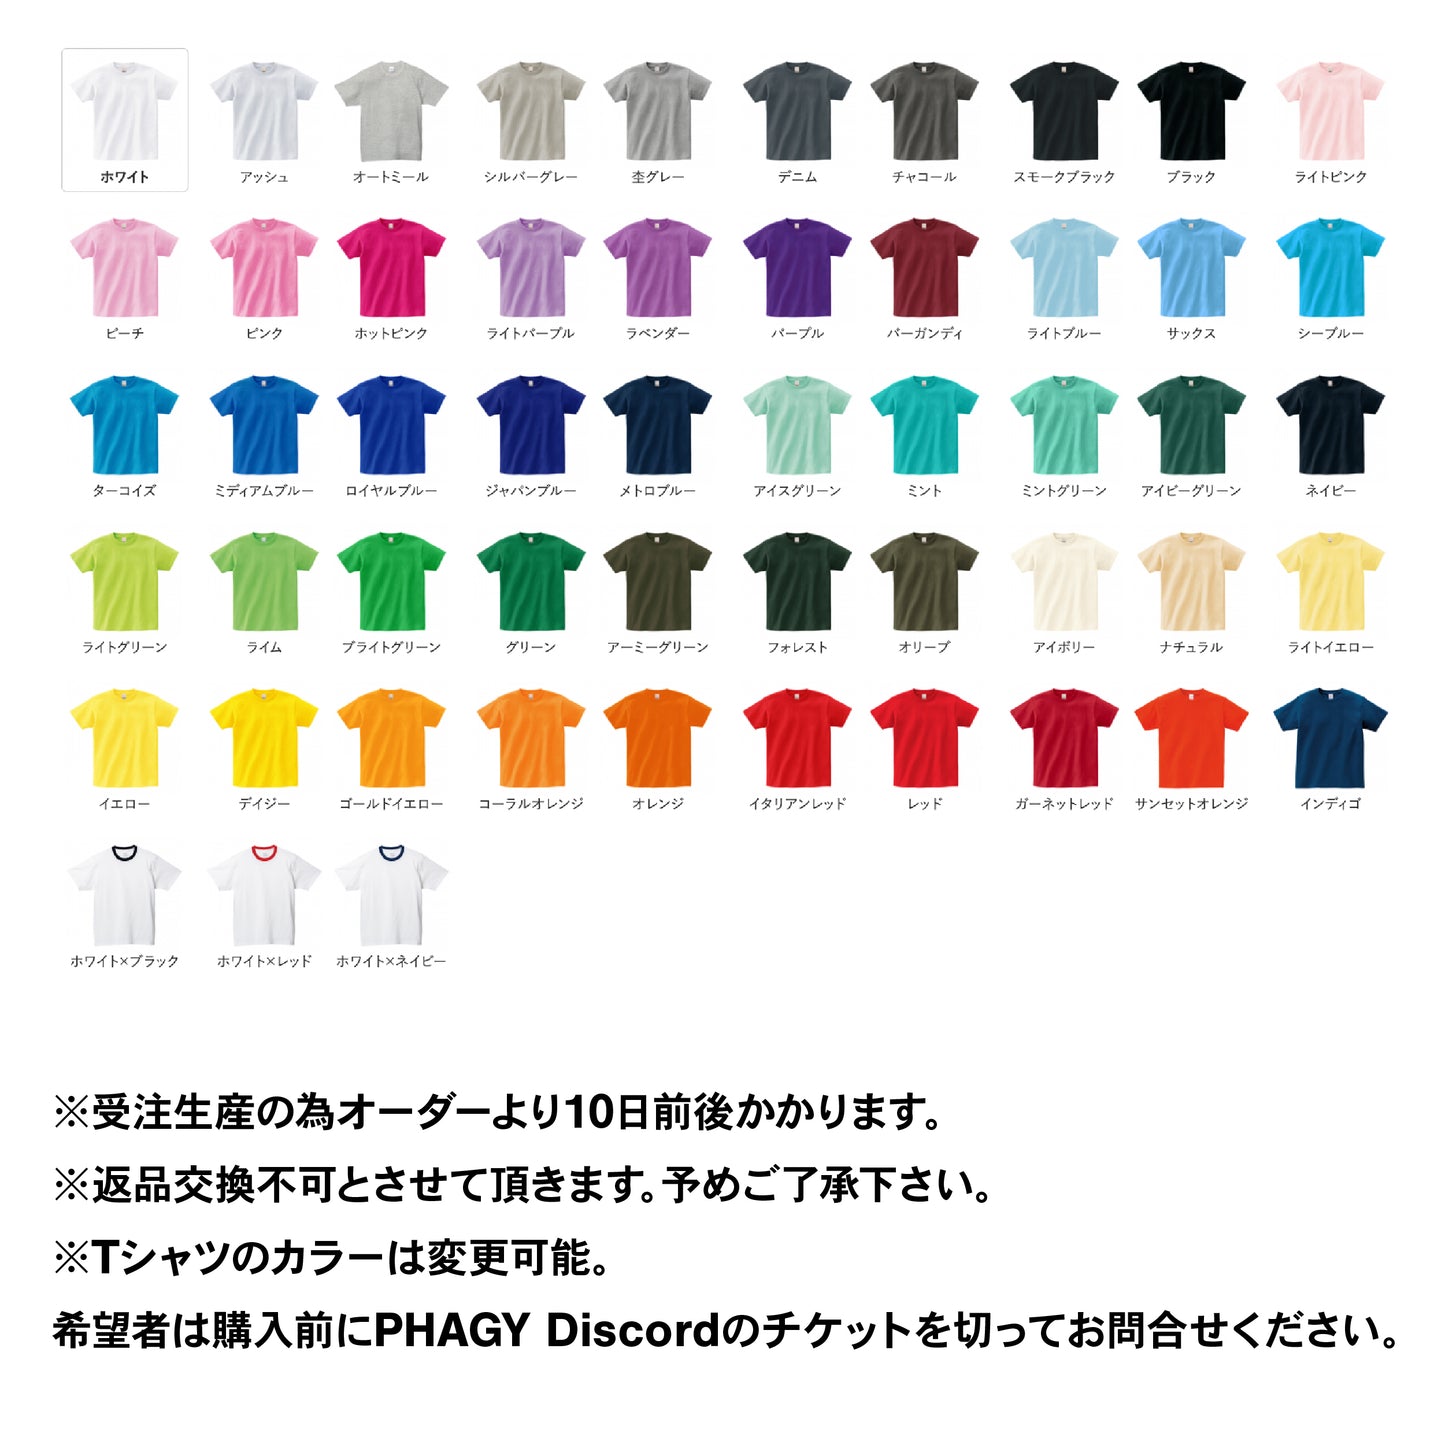 【PHAGY】Logo T-shirt 5.6oz/BLK